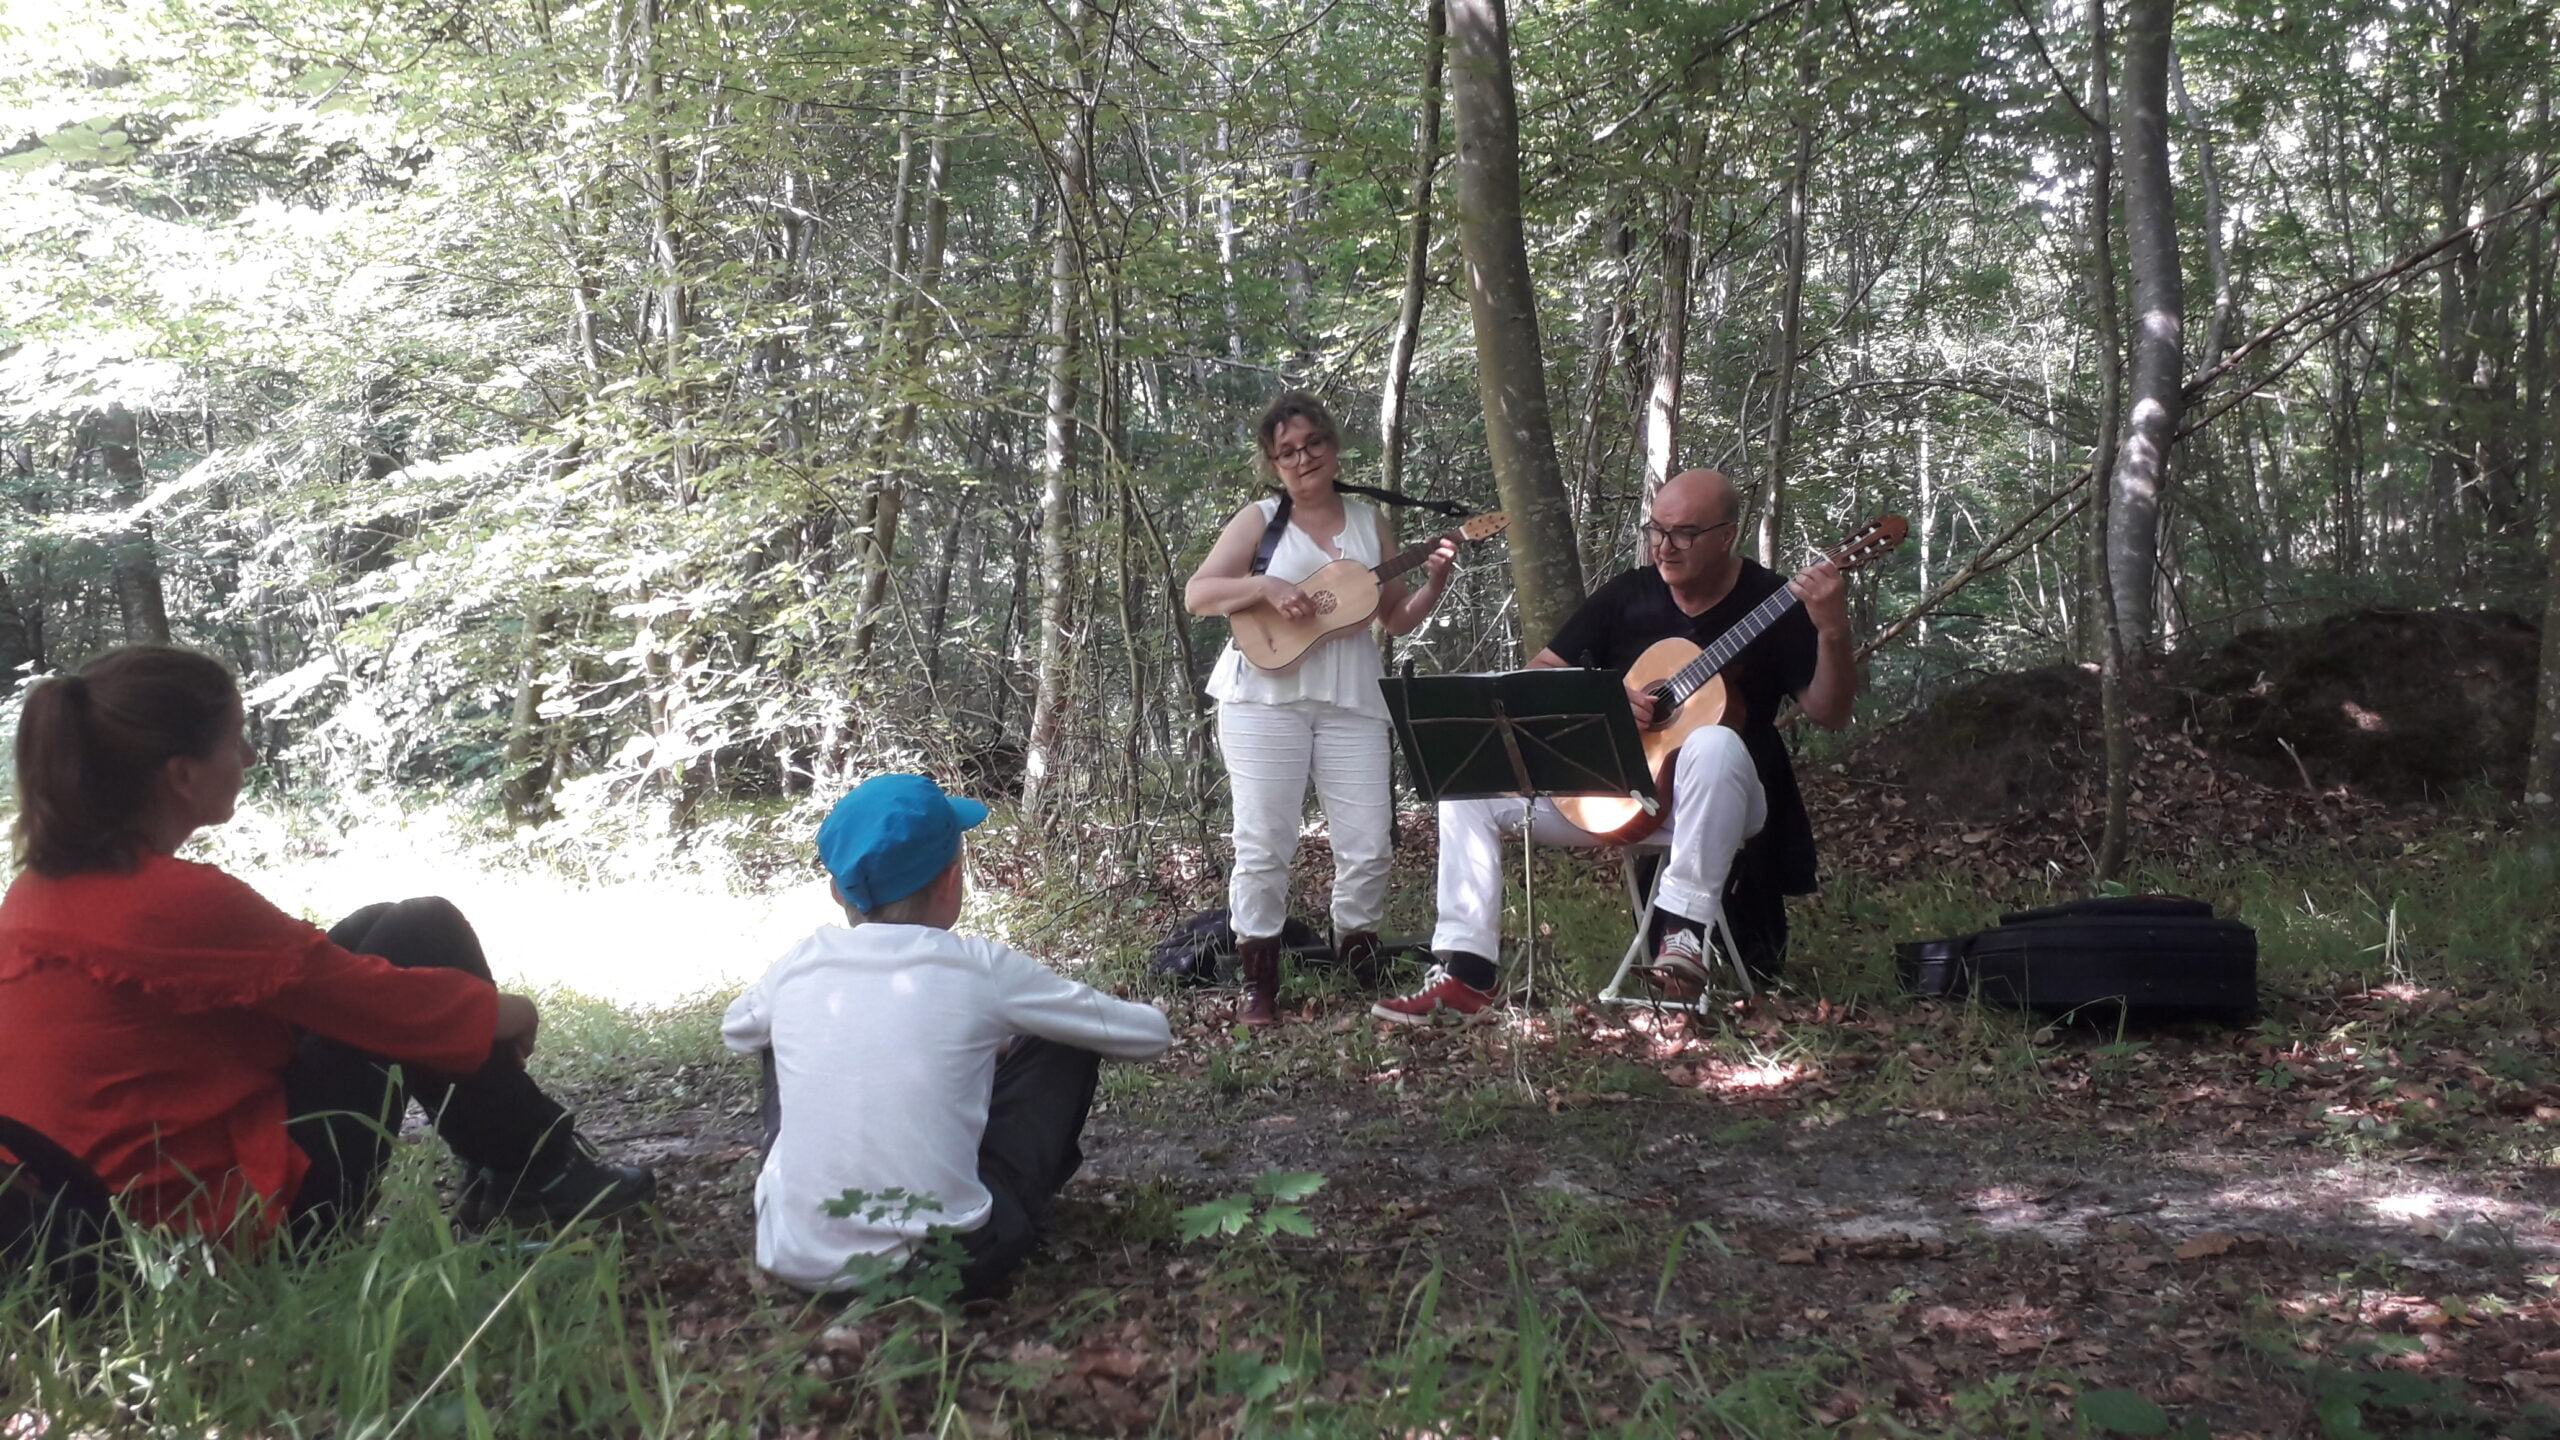 Bain de forêt musical en famille